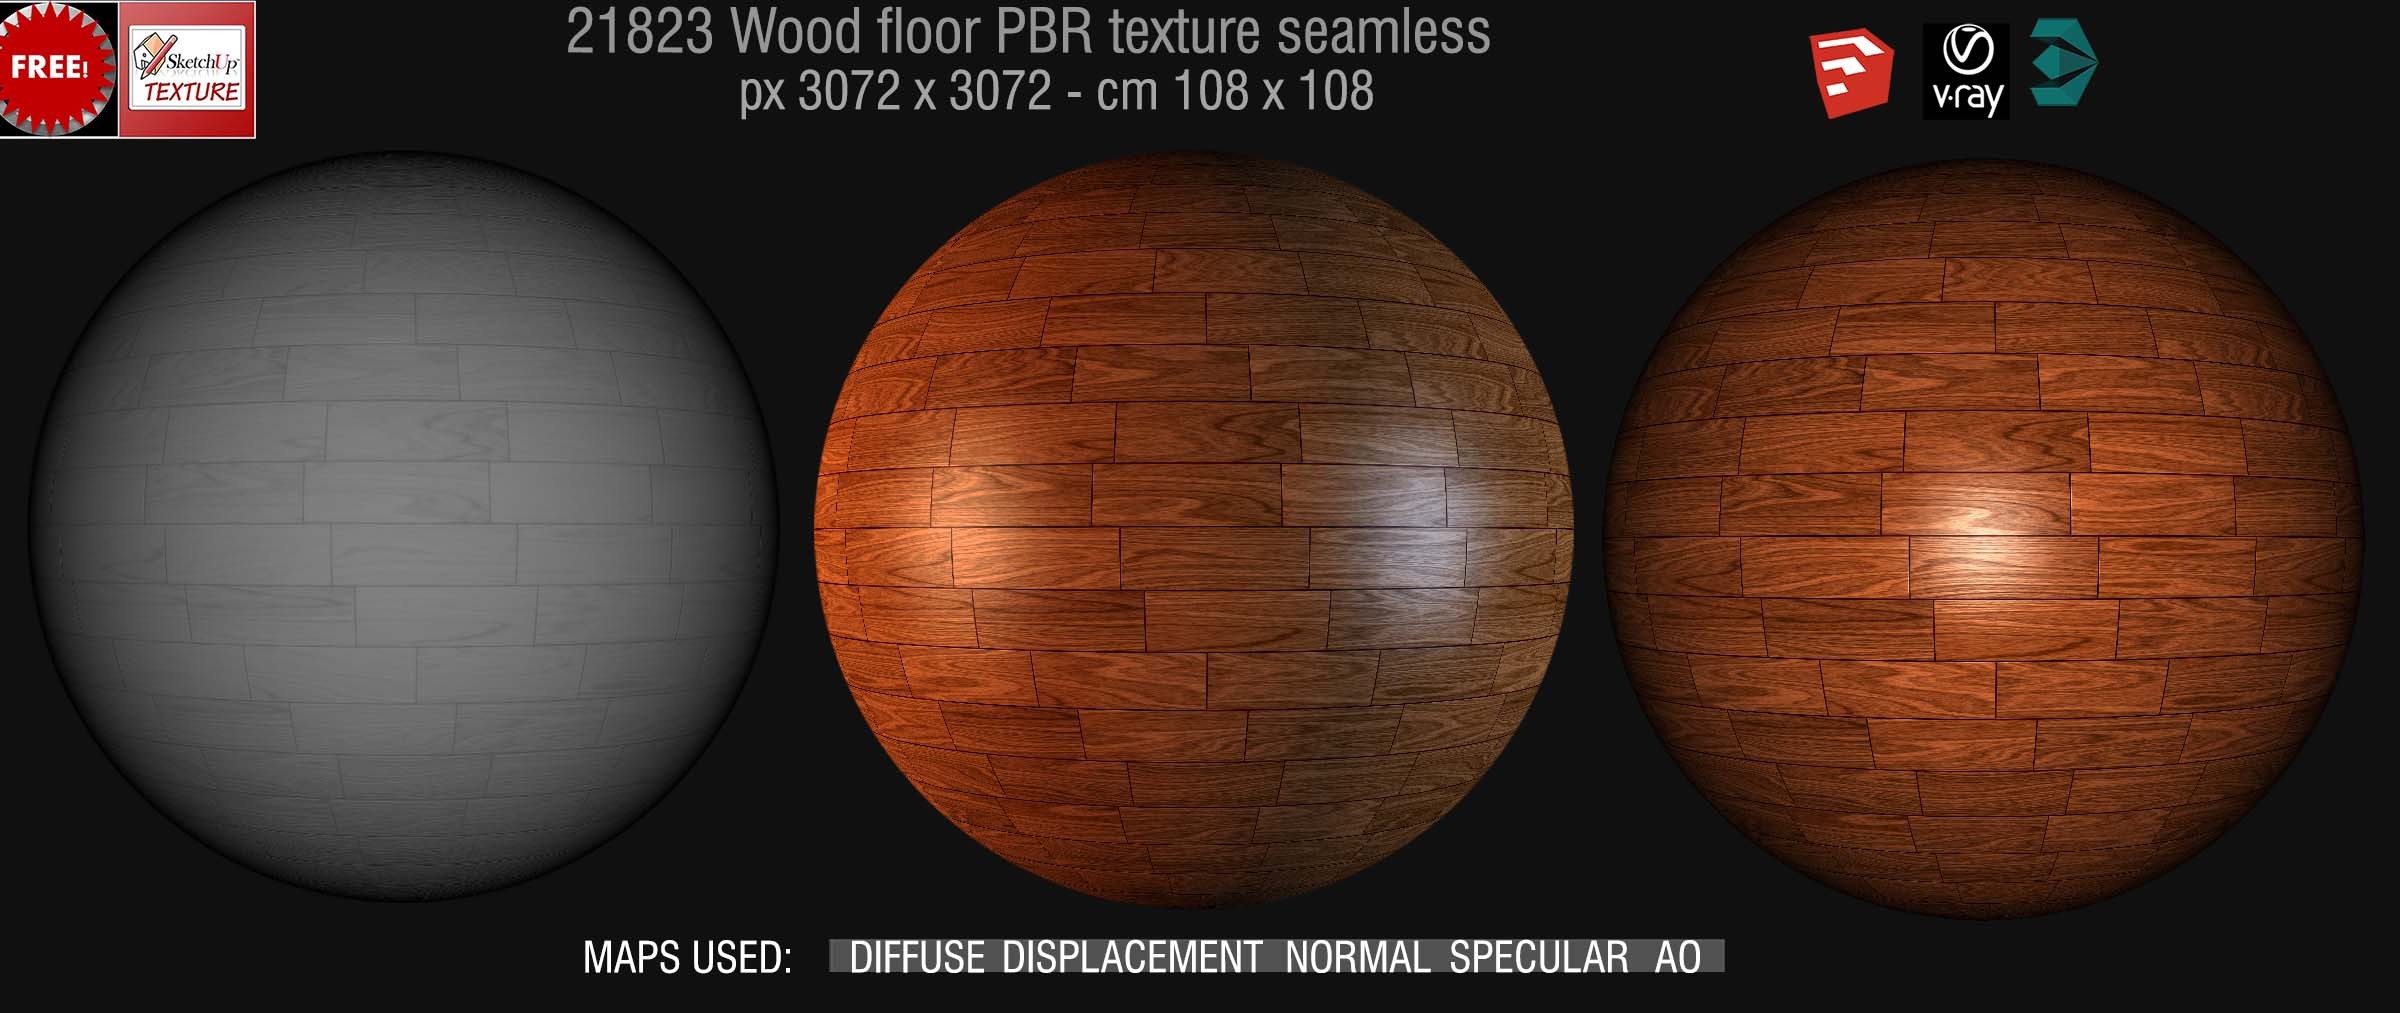 21823 Wood floor PBR texture seamless DEMO